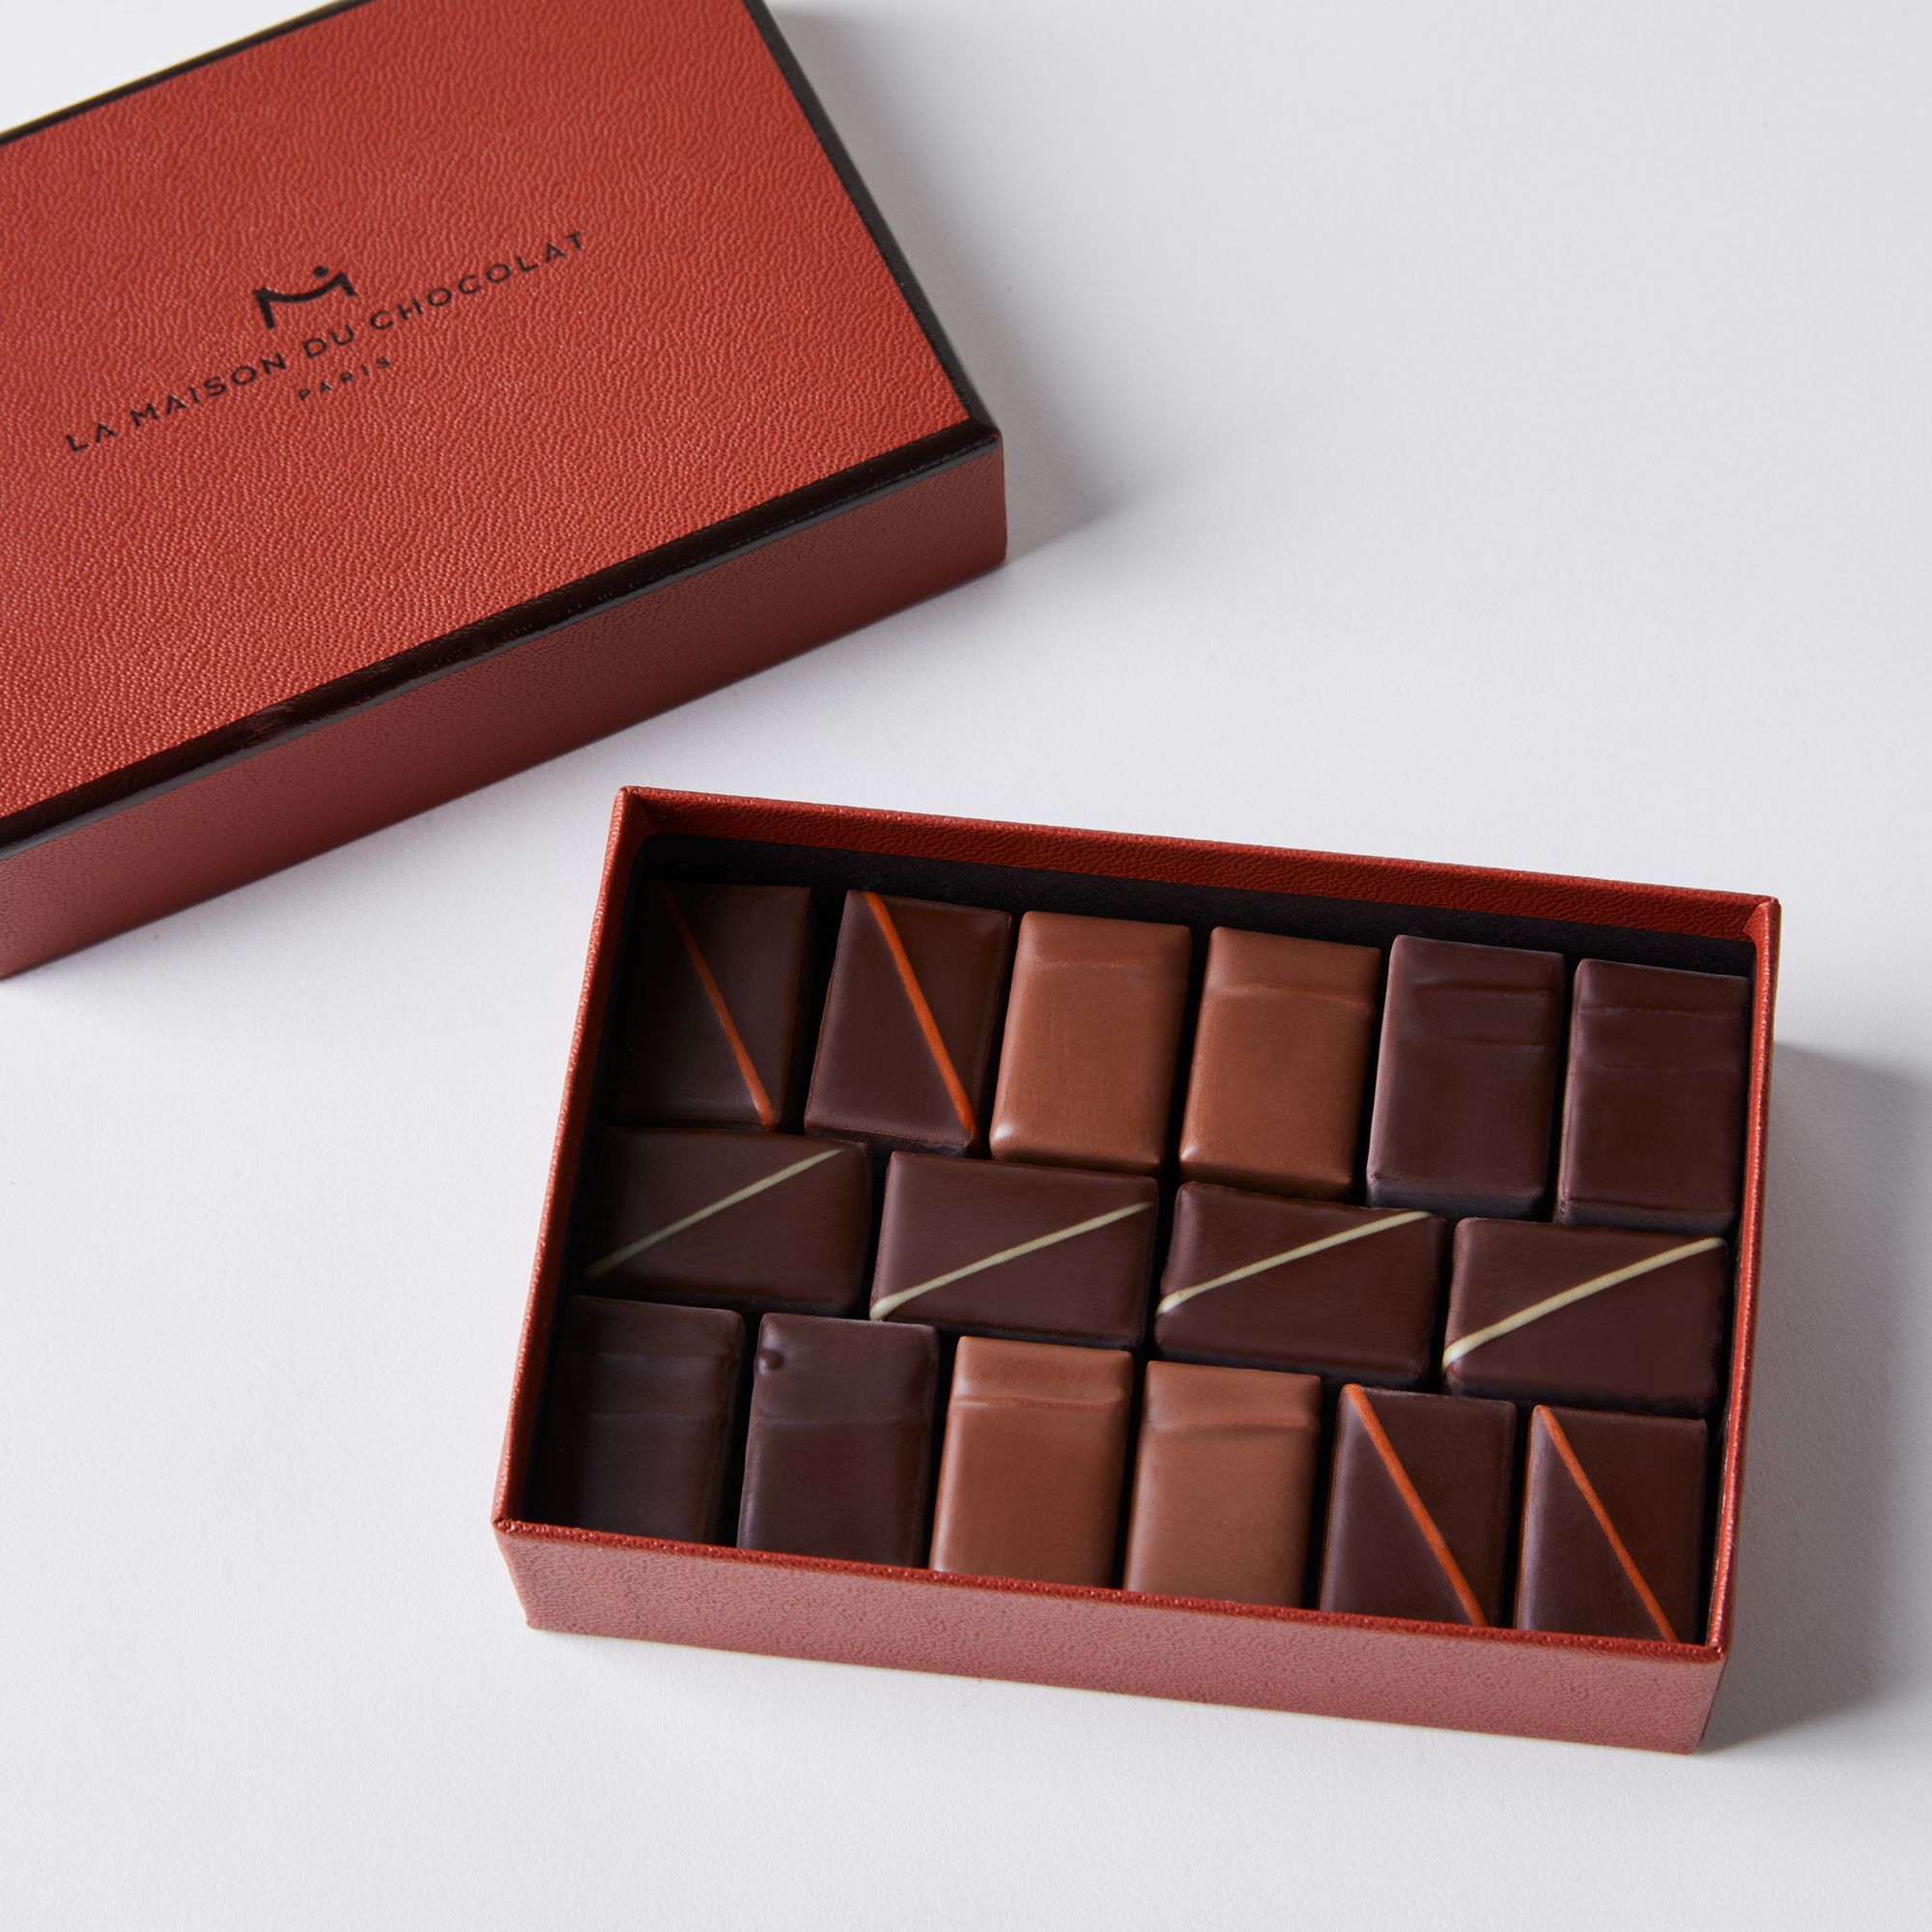 Gifts selection - La Maison du Chocolat